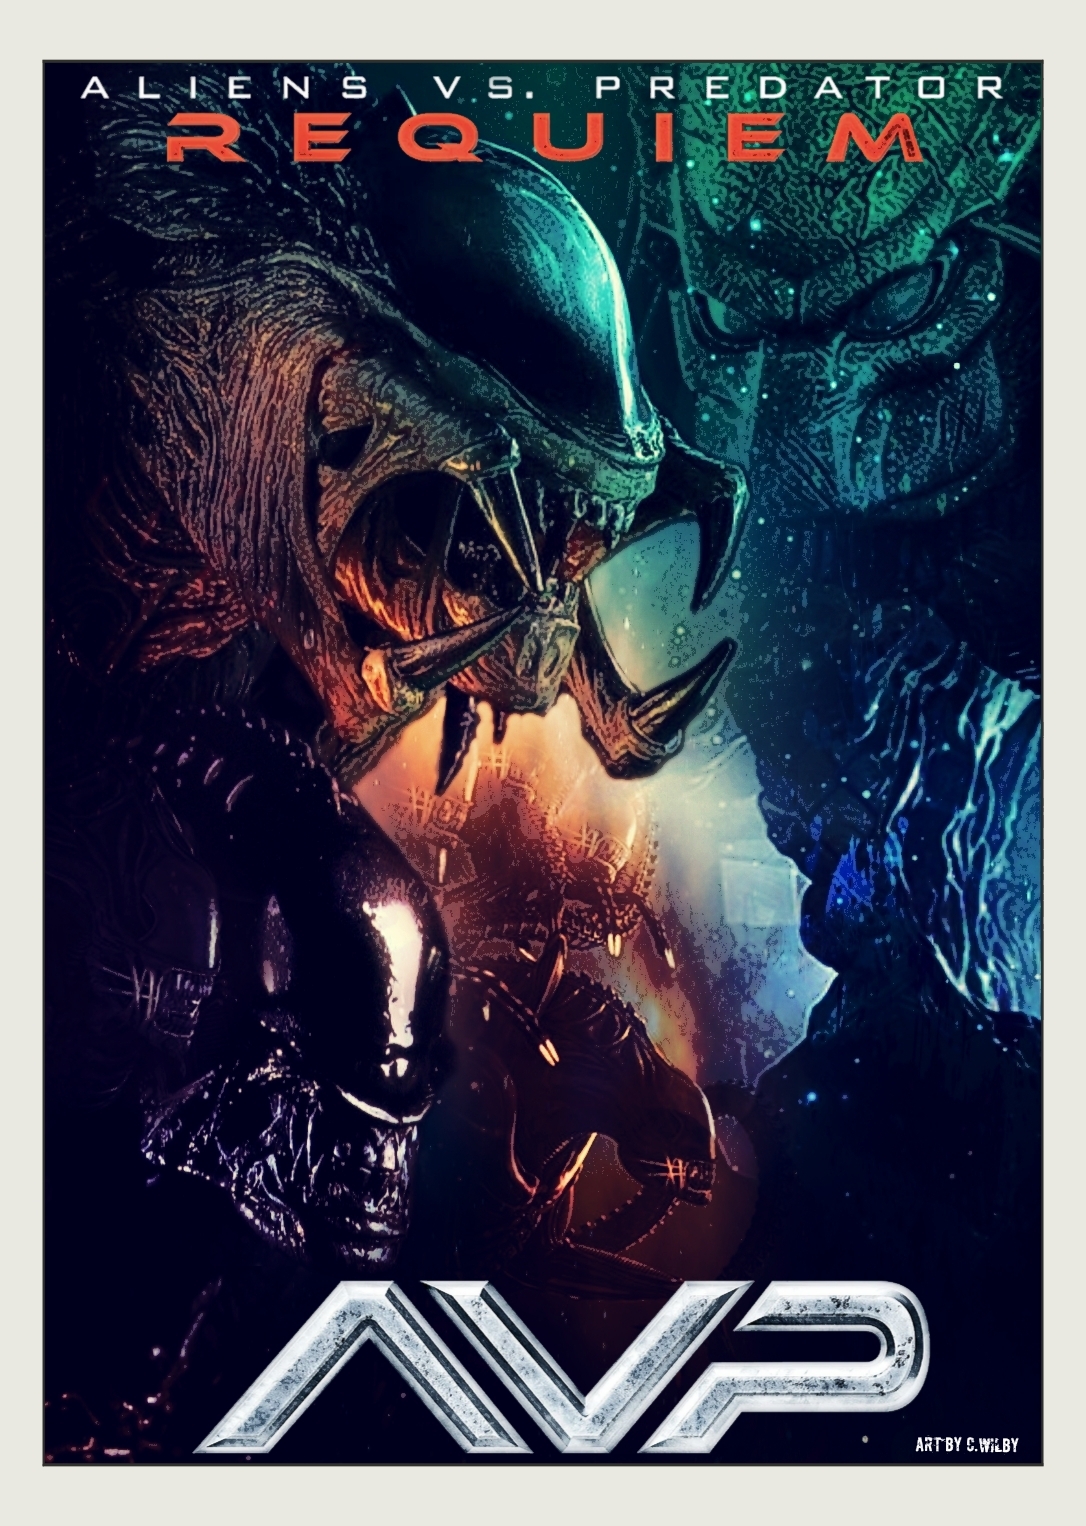 Aliens vs. Predator: Requiem - IGN